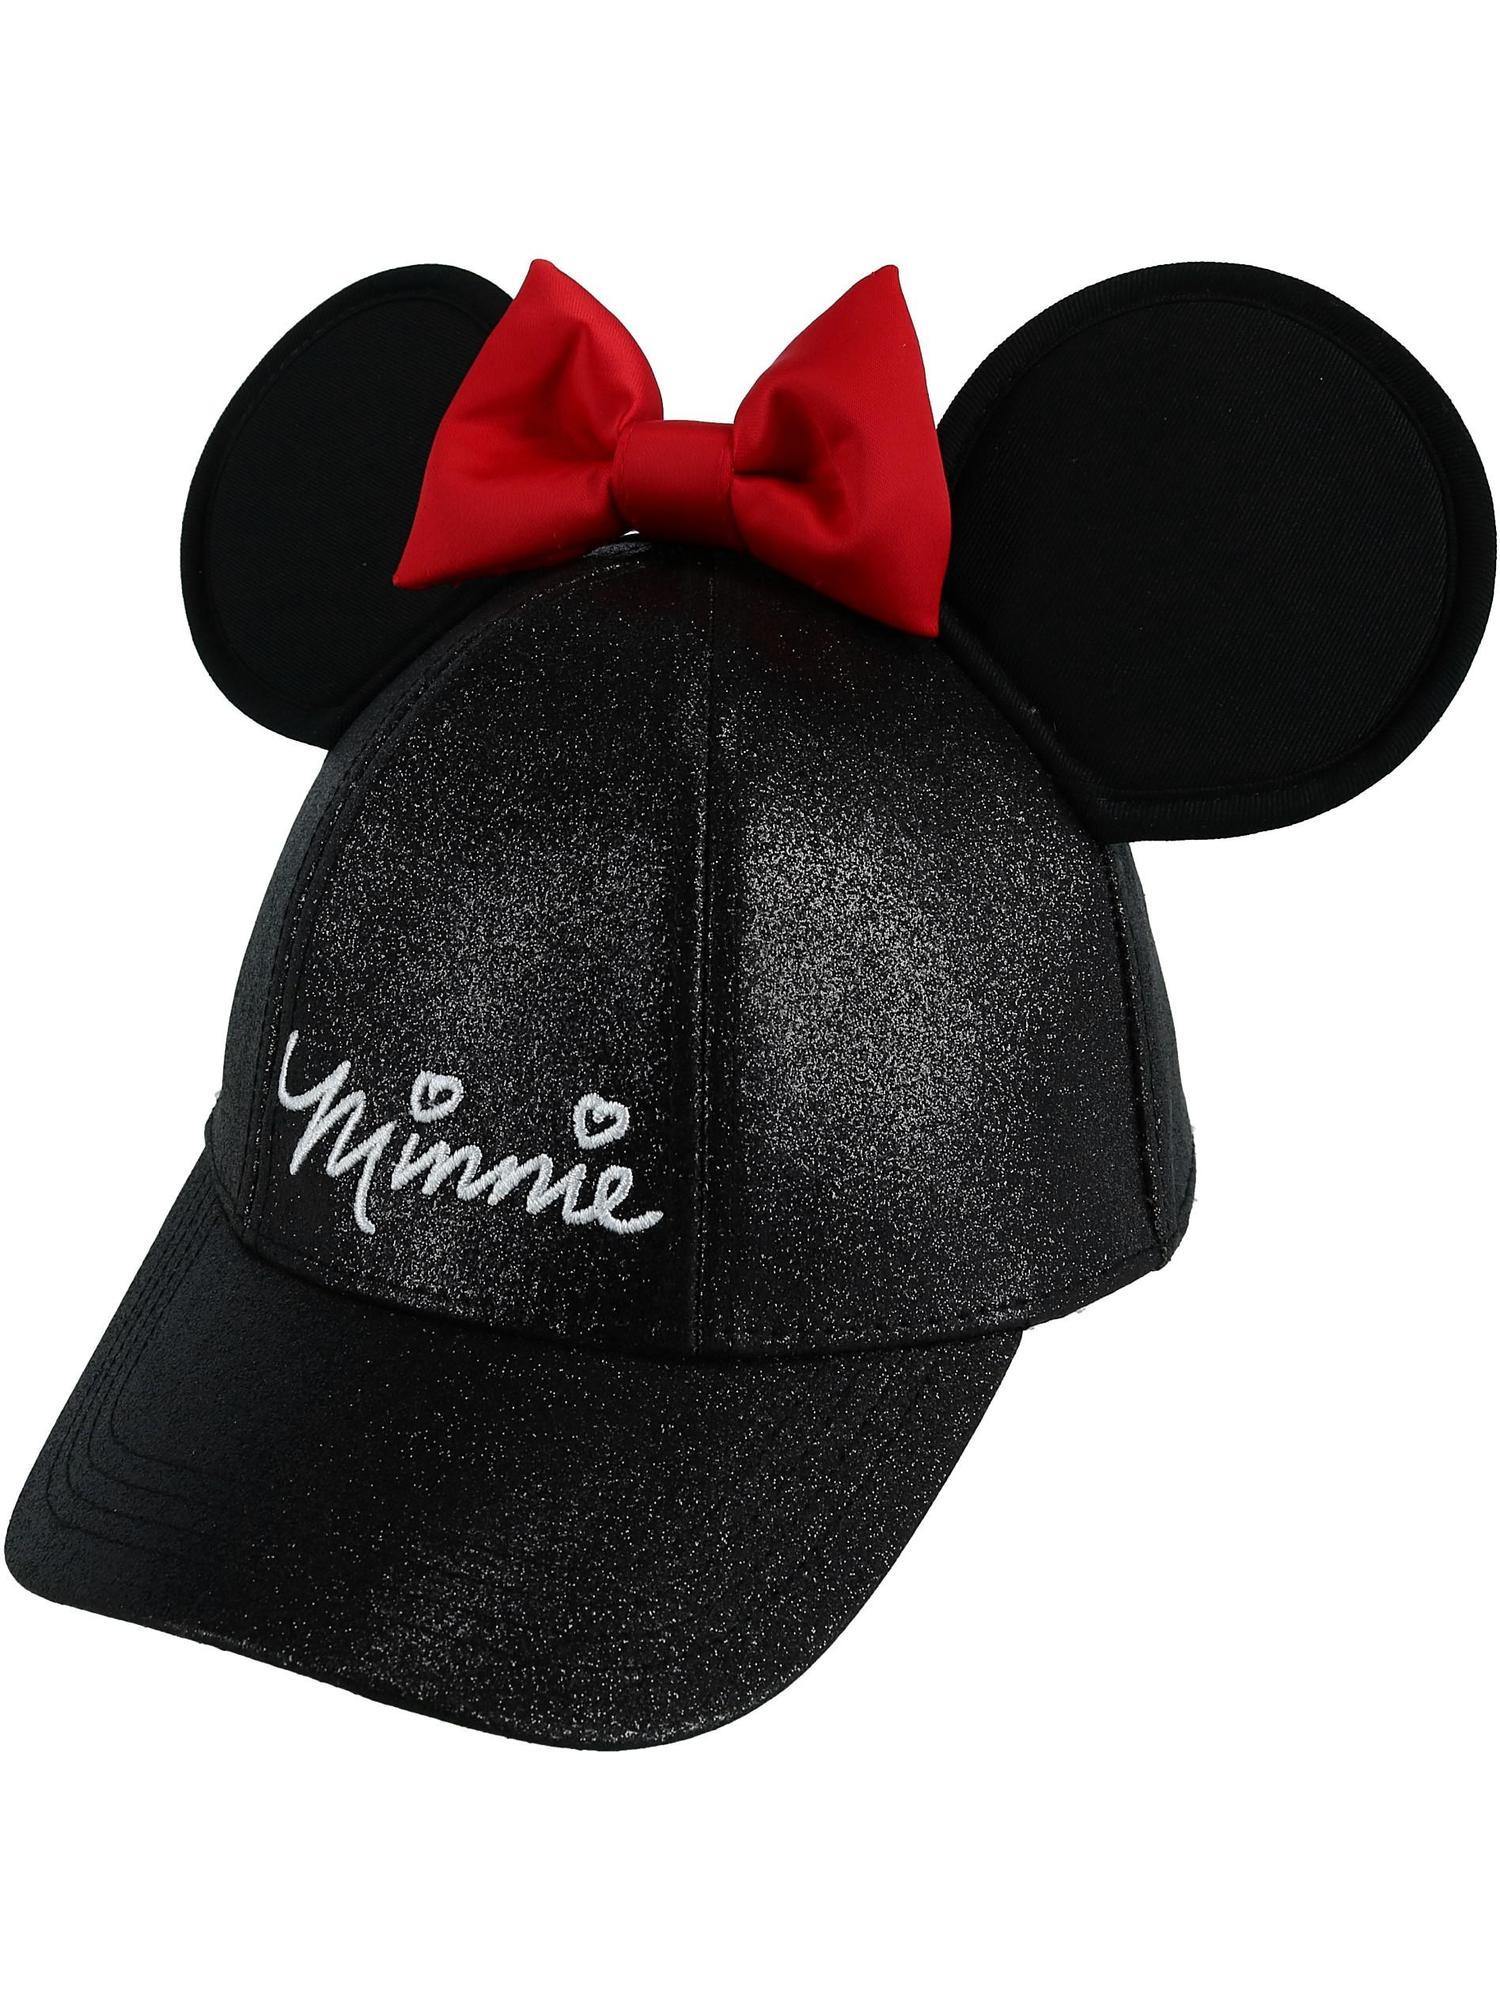 Disney Adult Minnie Glitter Ears Hat Red Bow